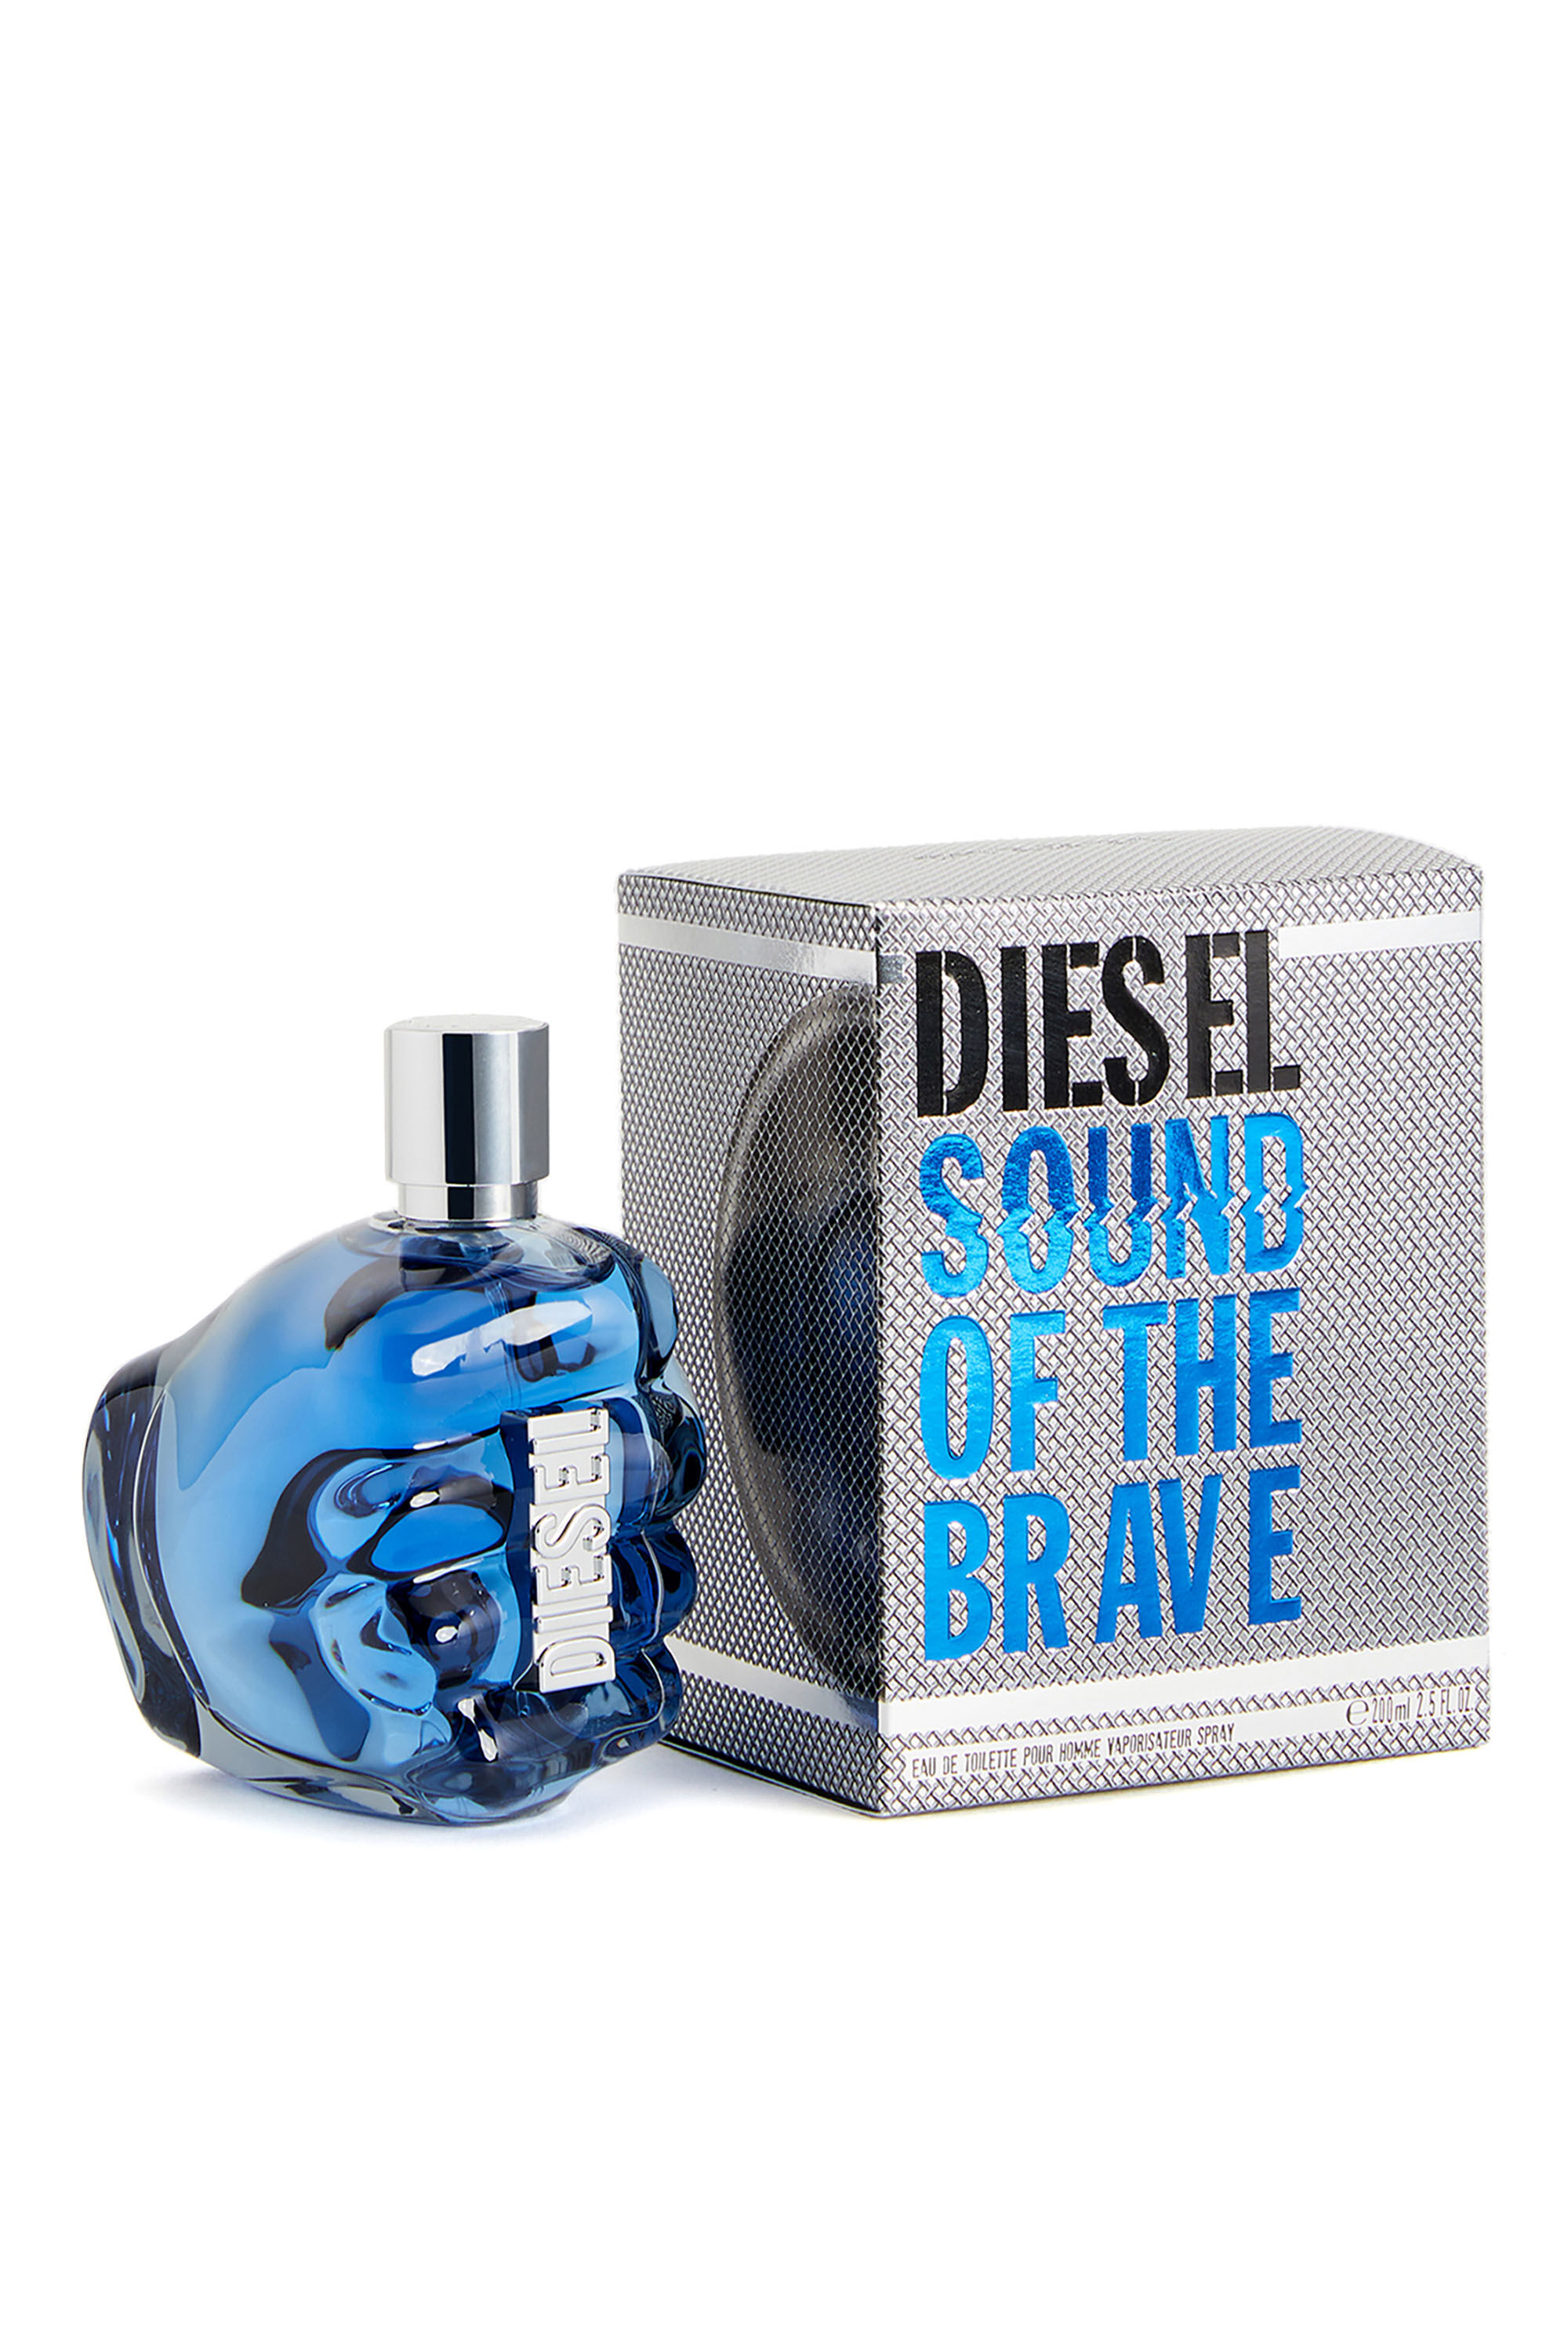 Diesel - SOUND OF THE BRAVE 200ML, Blu - Image 3